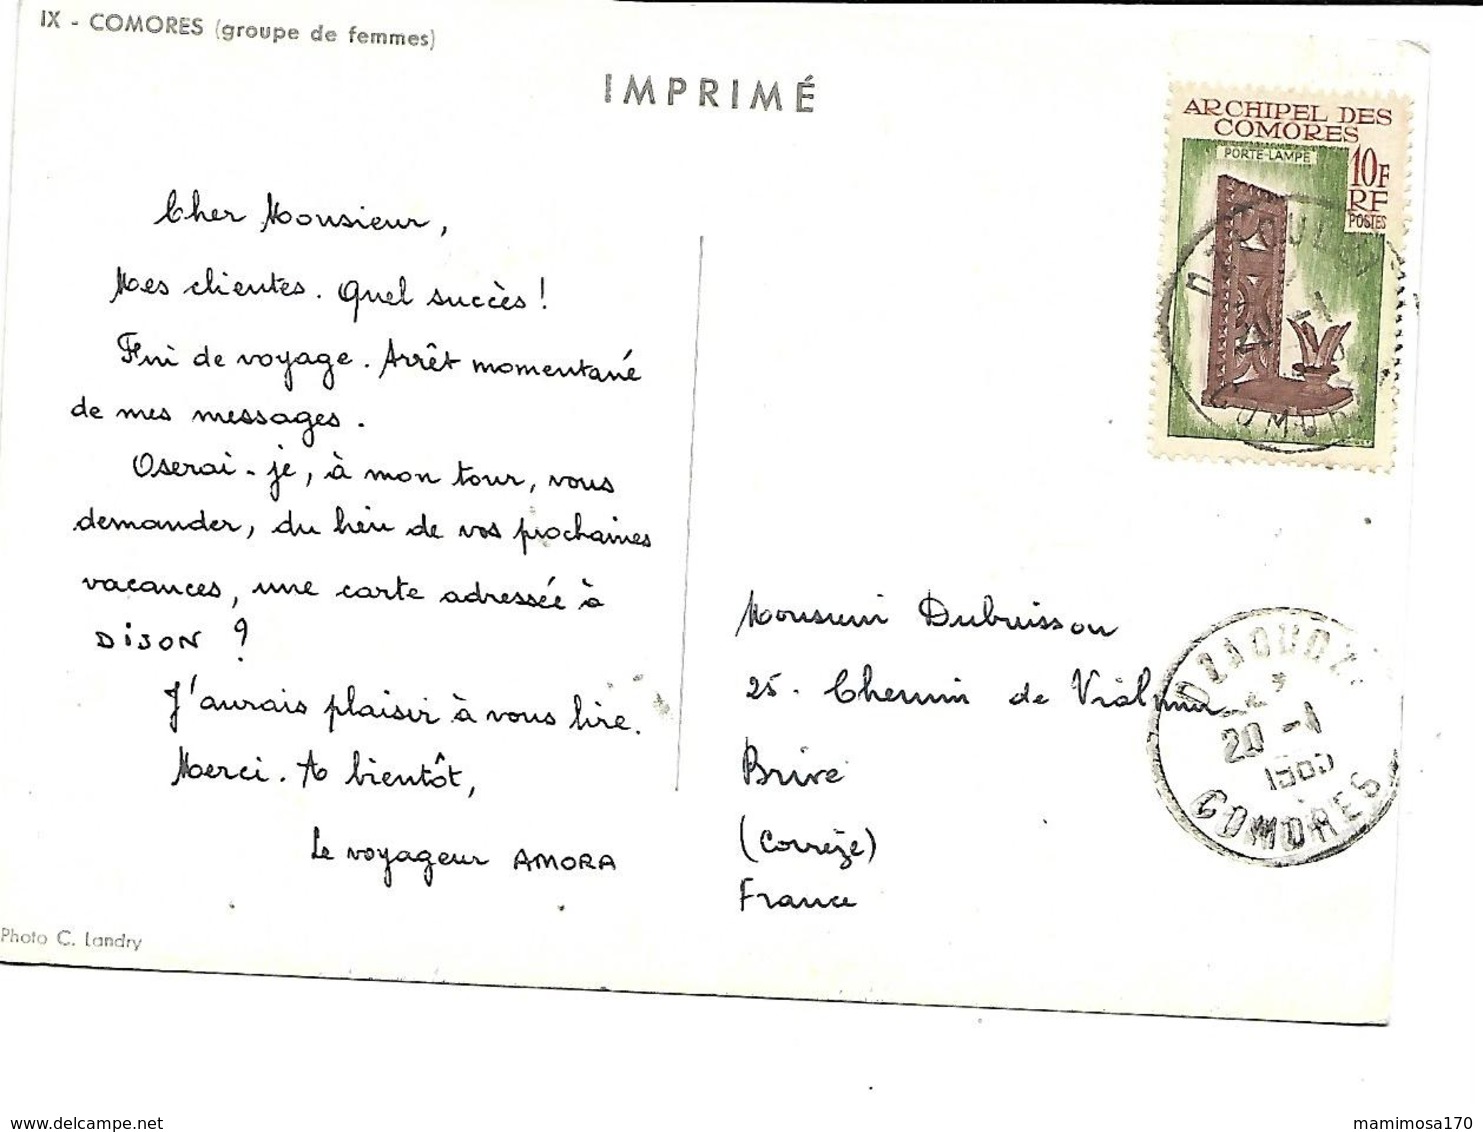 Comores-MAYOTTE-Groupe De Femmes En Apparats-PUB.Collection AMORA-TIMBRE-Obliteration-1961 - Mayotte